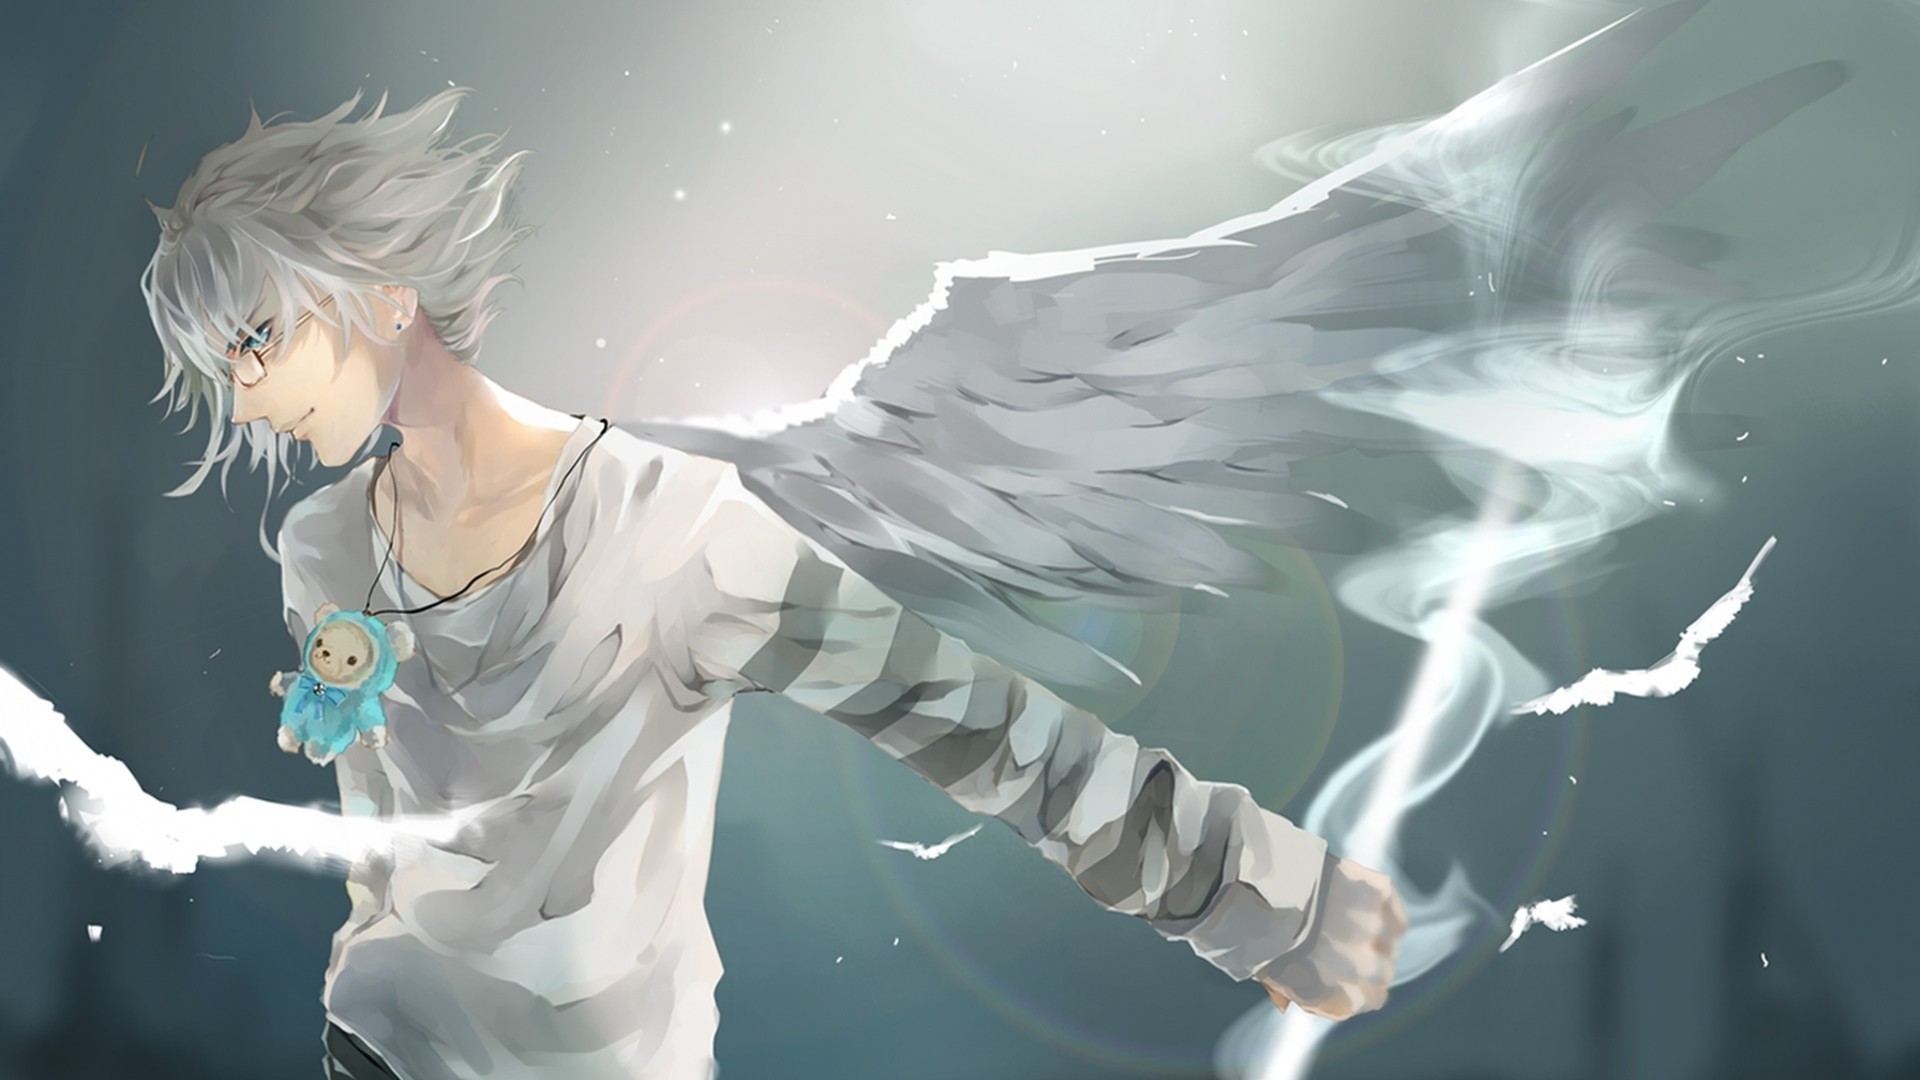 Download Wallpaper Anime, Boy, Wings, Art Full Hd 1080p - Anime Male With Wings - HD Wallpaper 